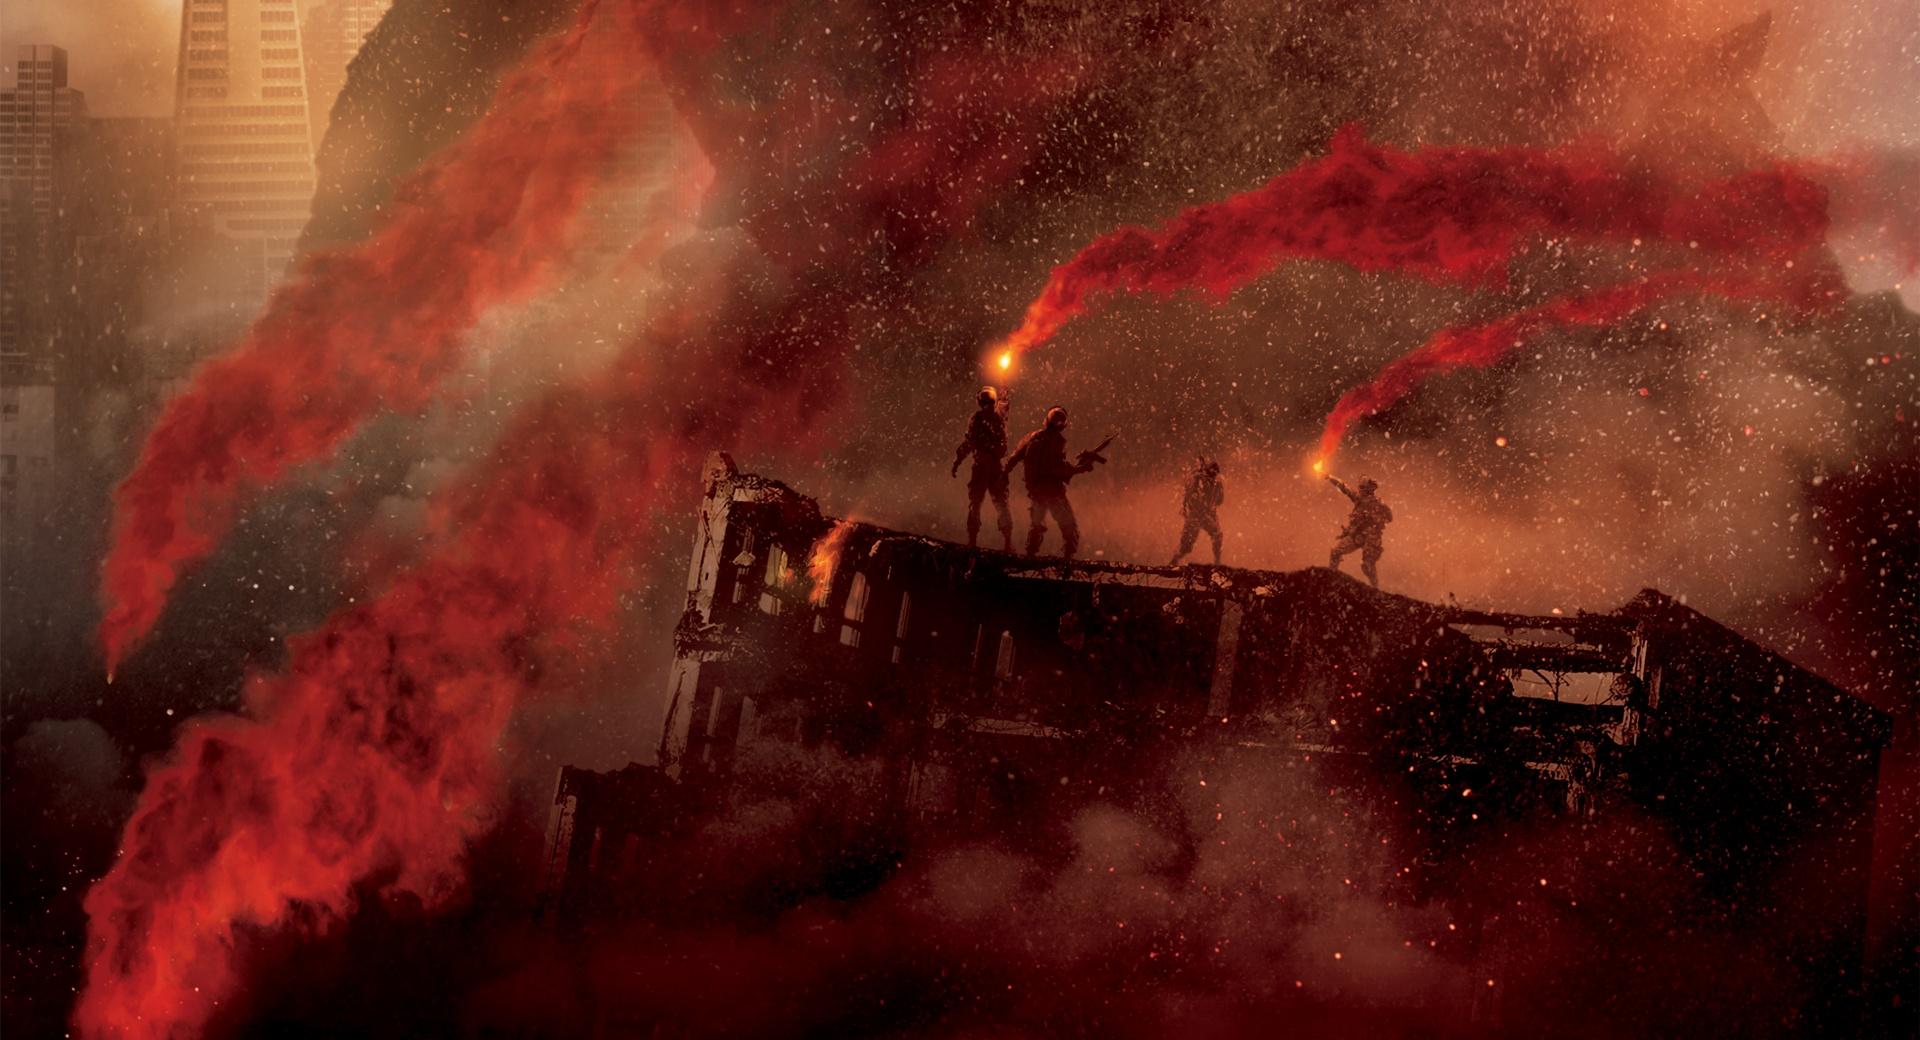 Godzilla 2014 Movie at 1280 x 960 size wallpapers HD quality